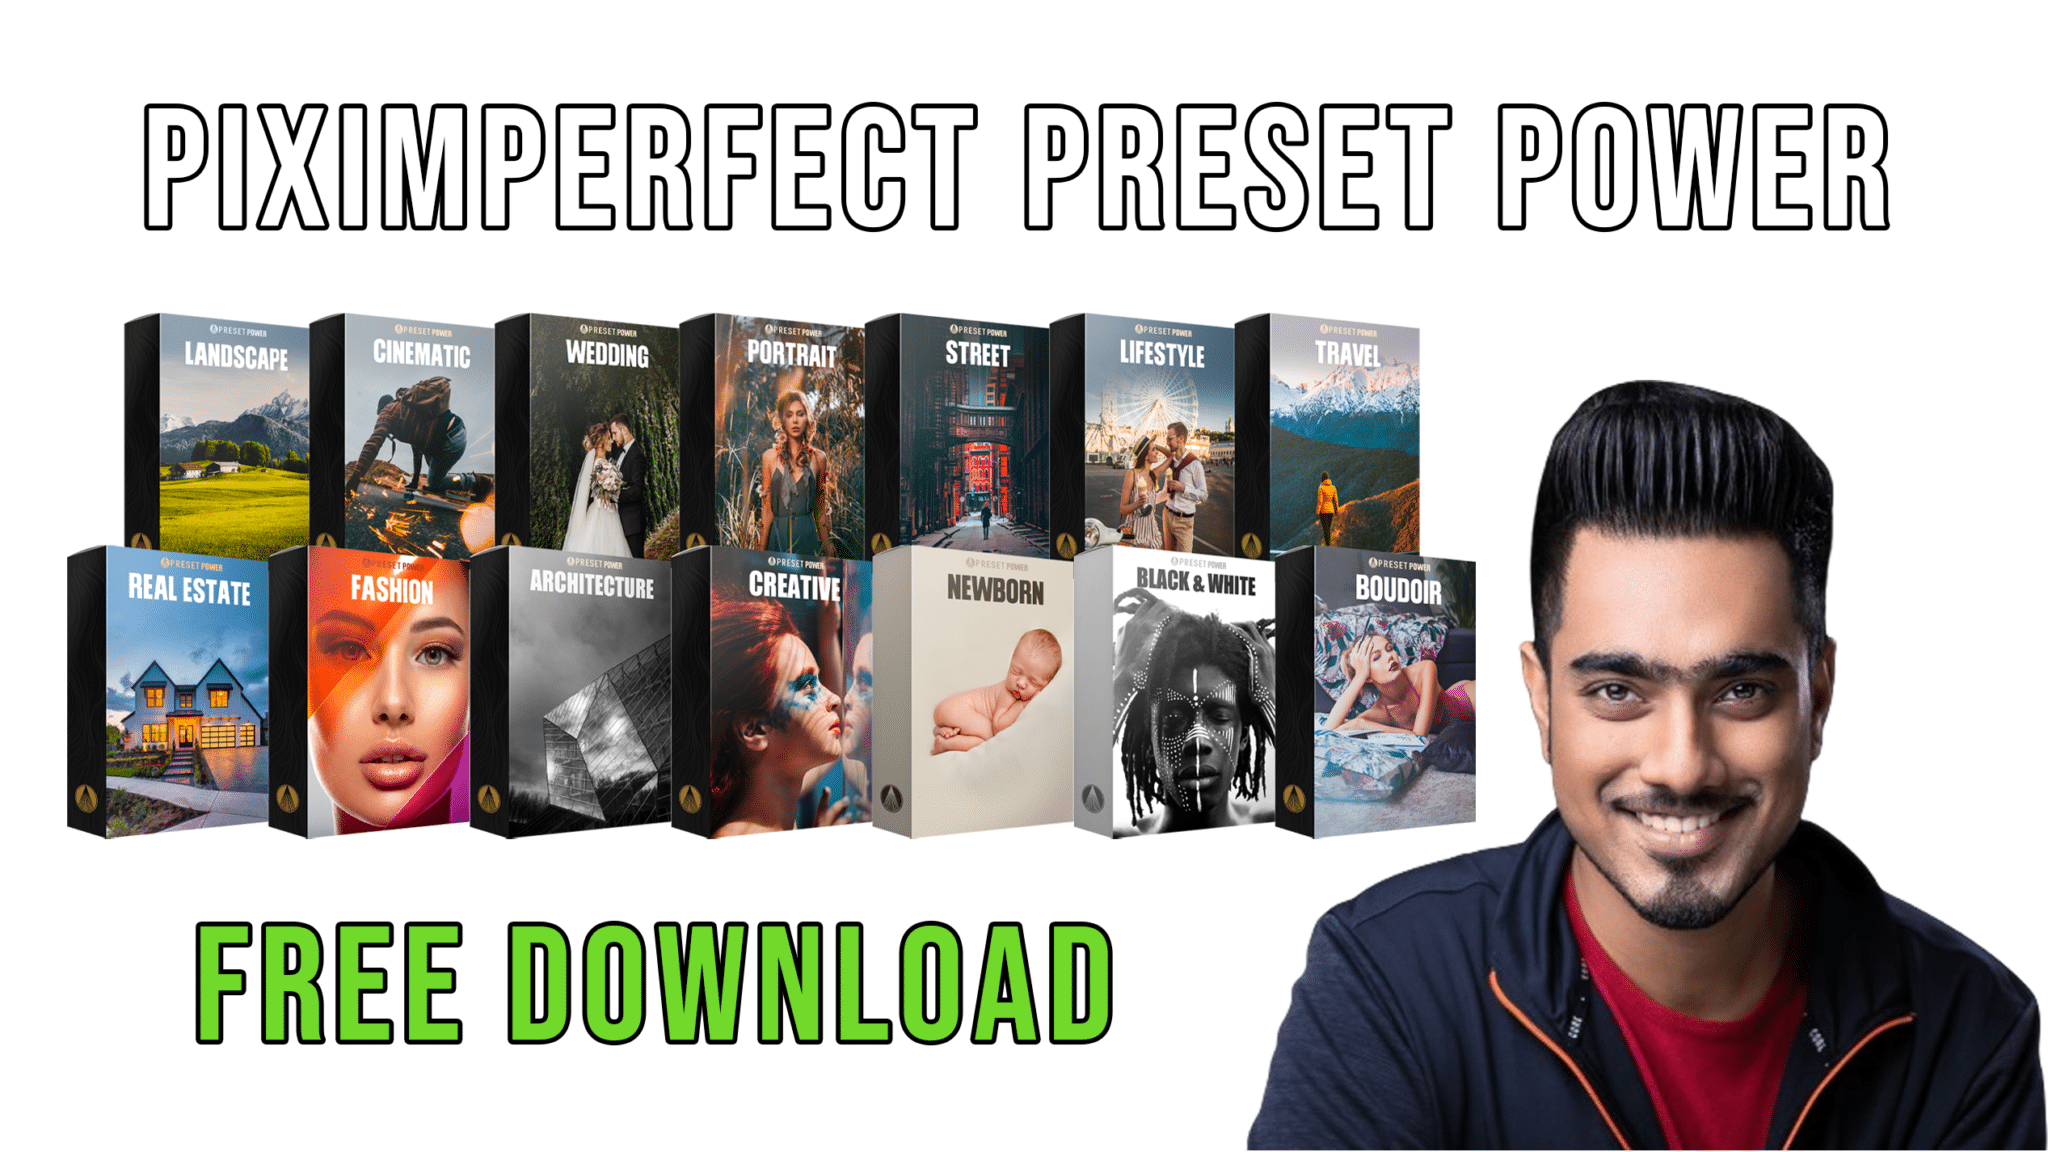 PiXimperfect Preset Power Free Download